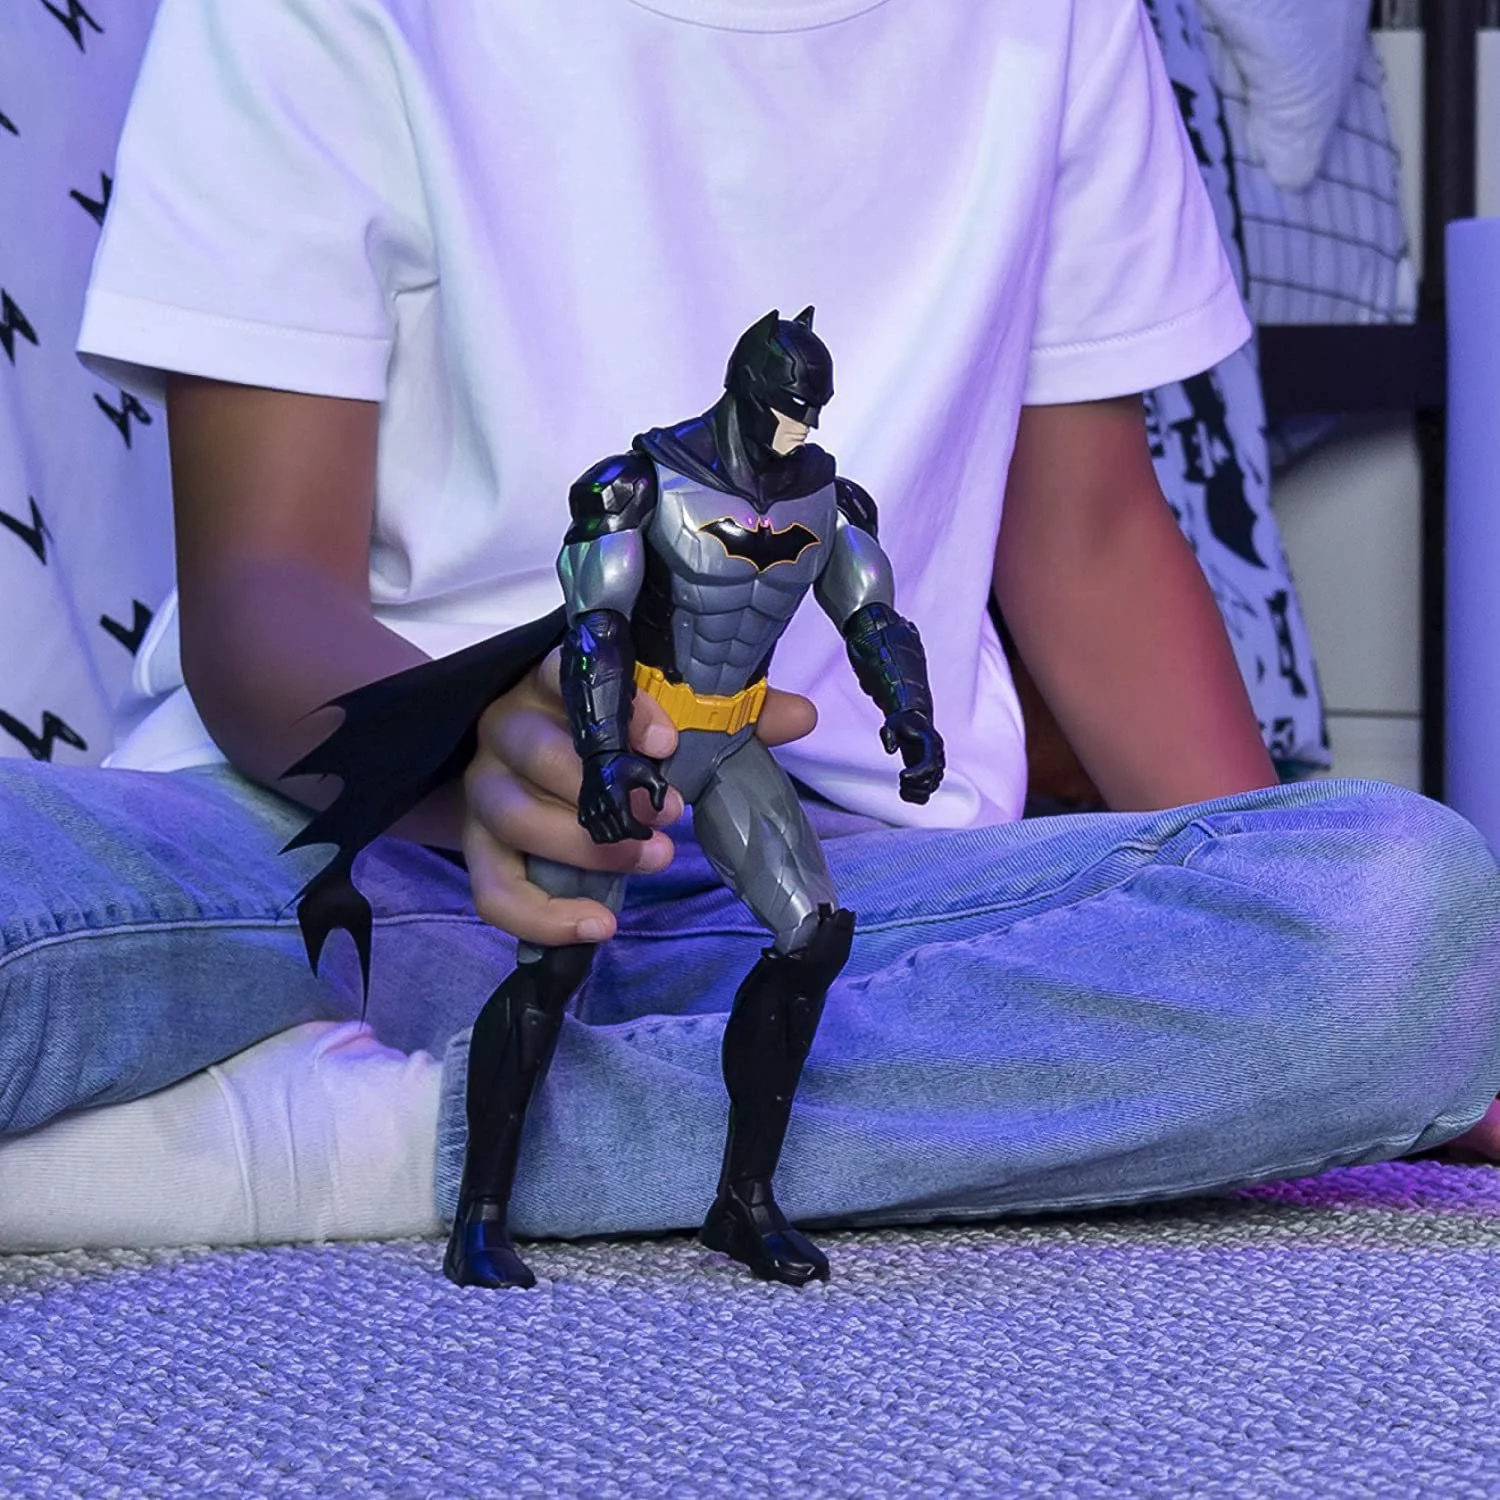 Figurina Spin Master Batman, 30 cm